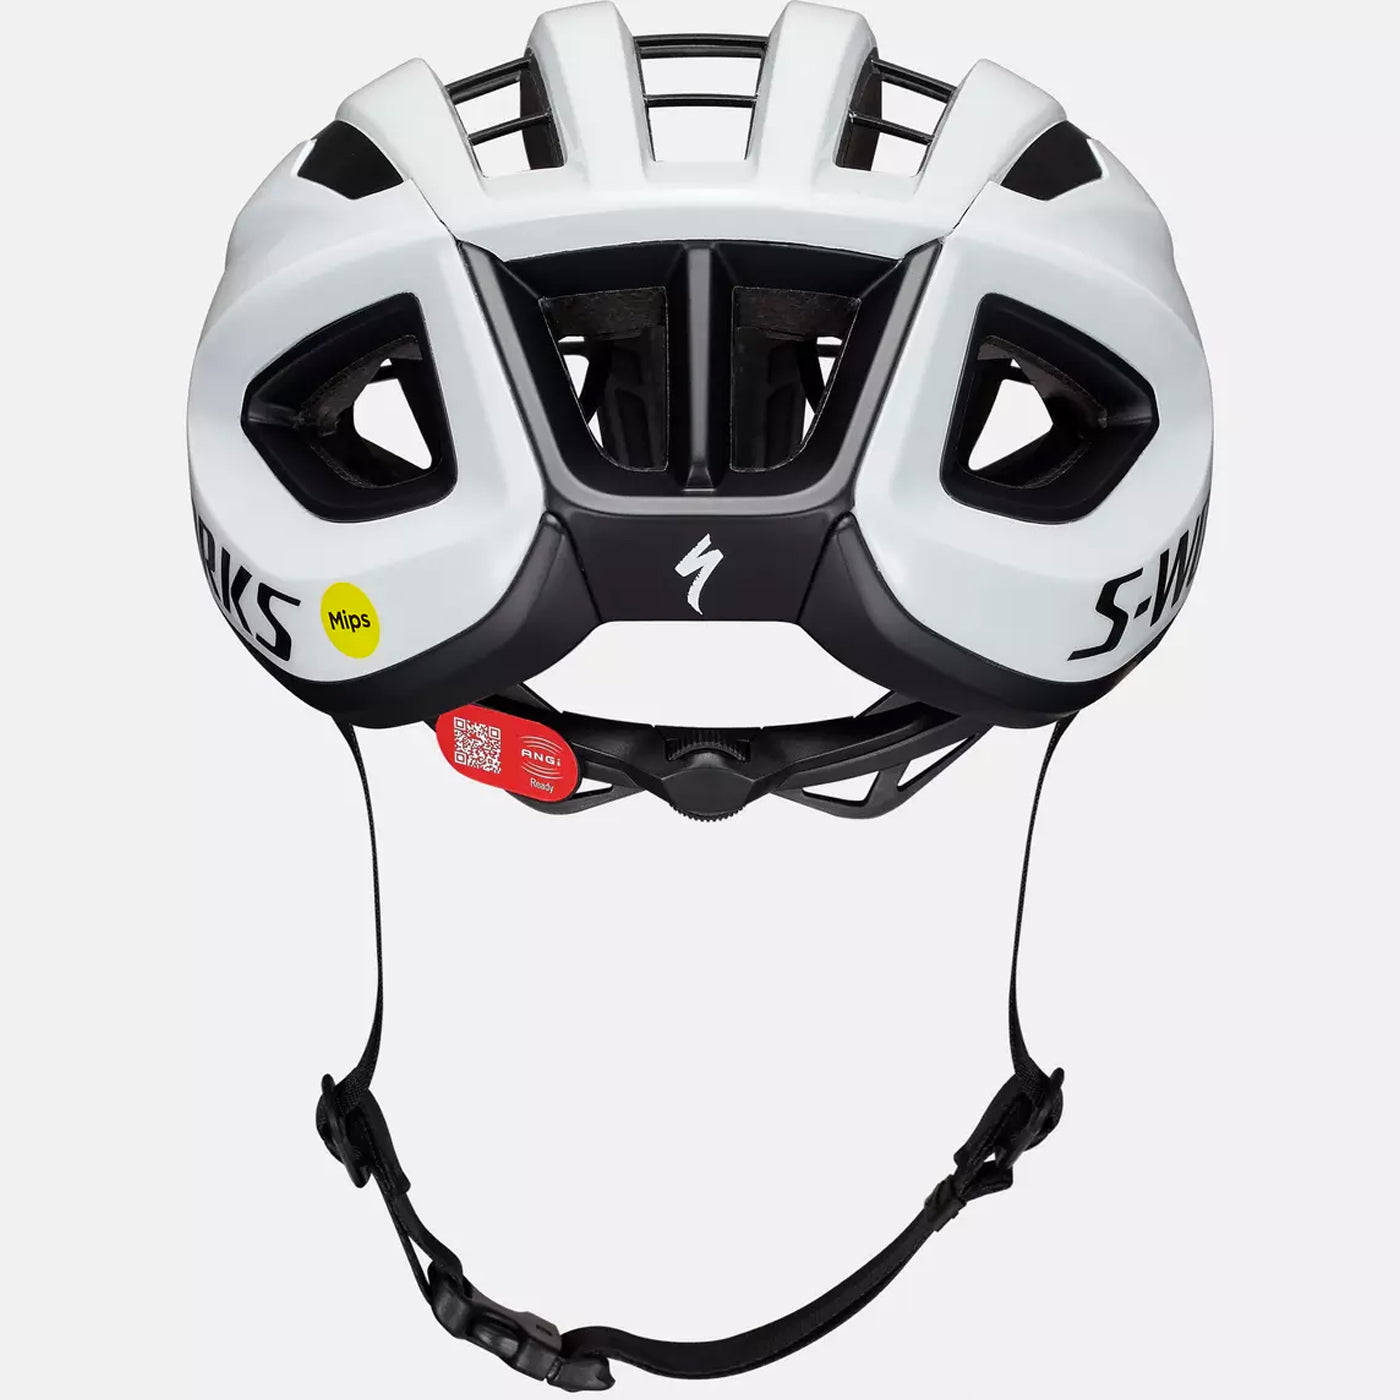 Specialized Prevail 3 helmet - White black